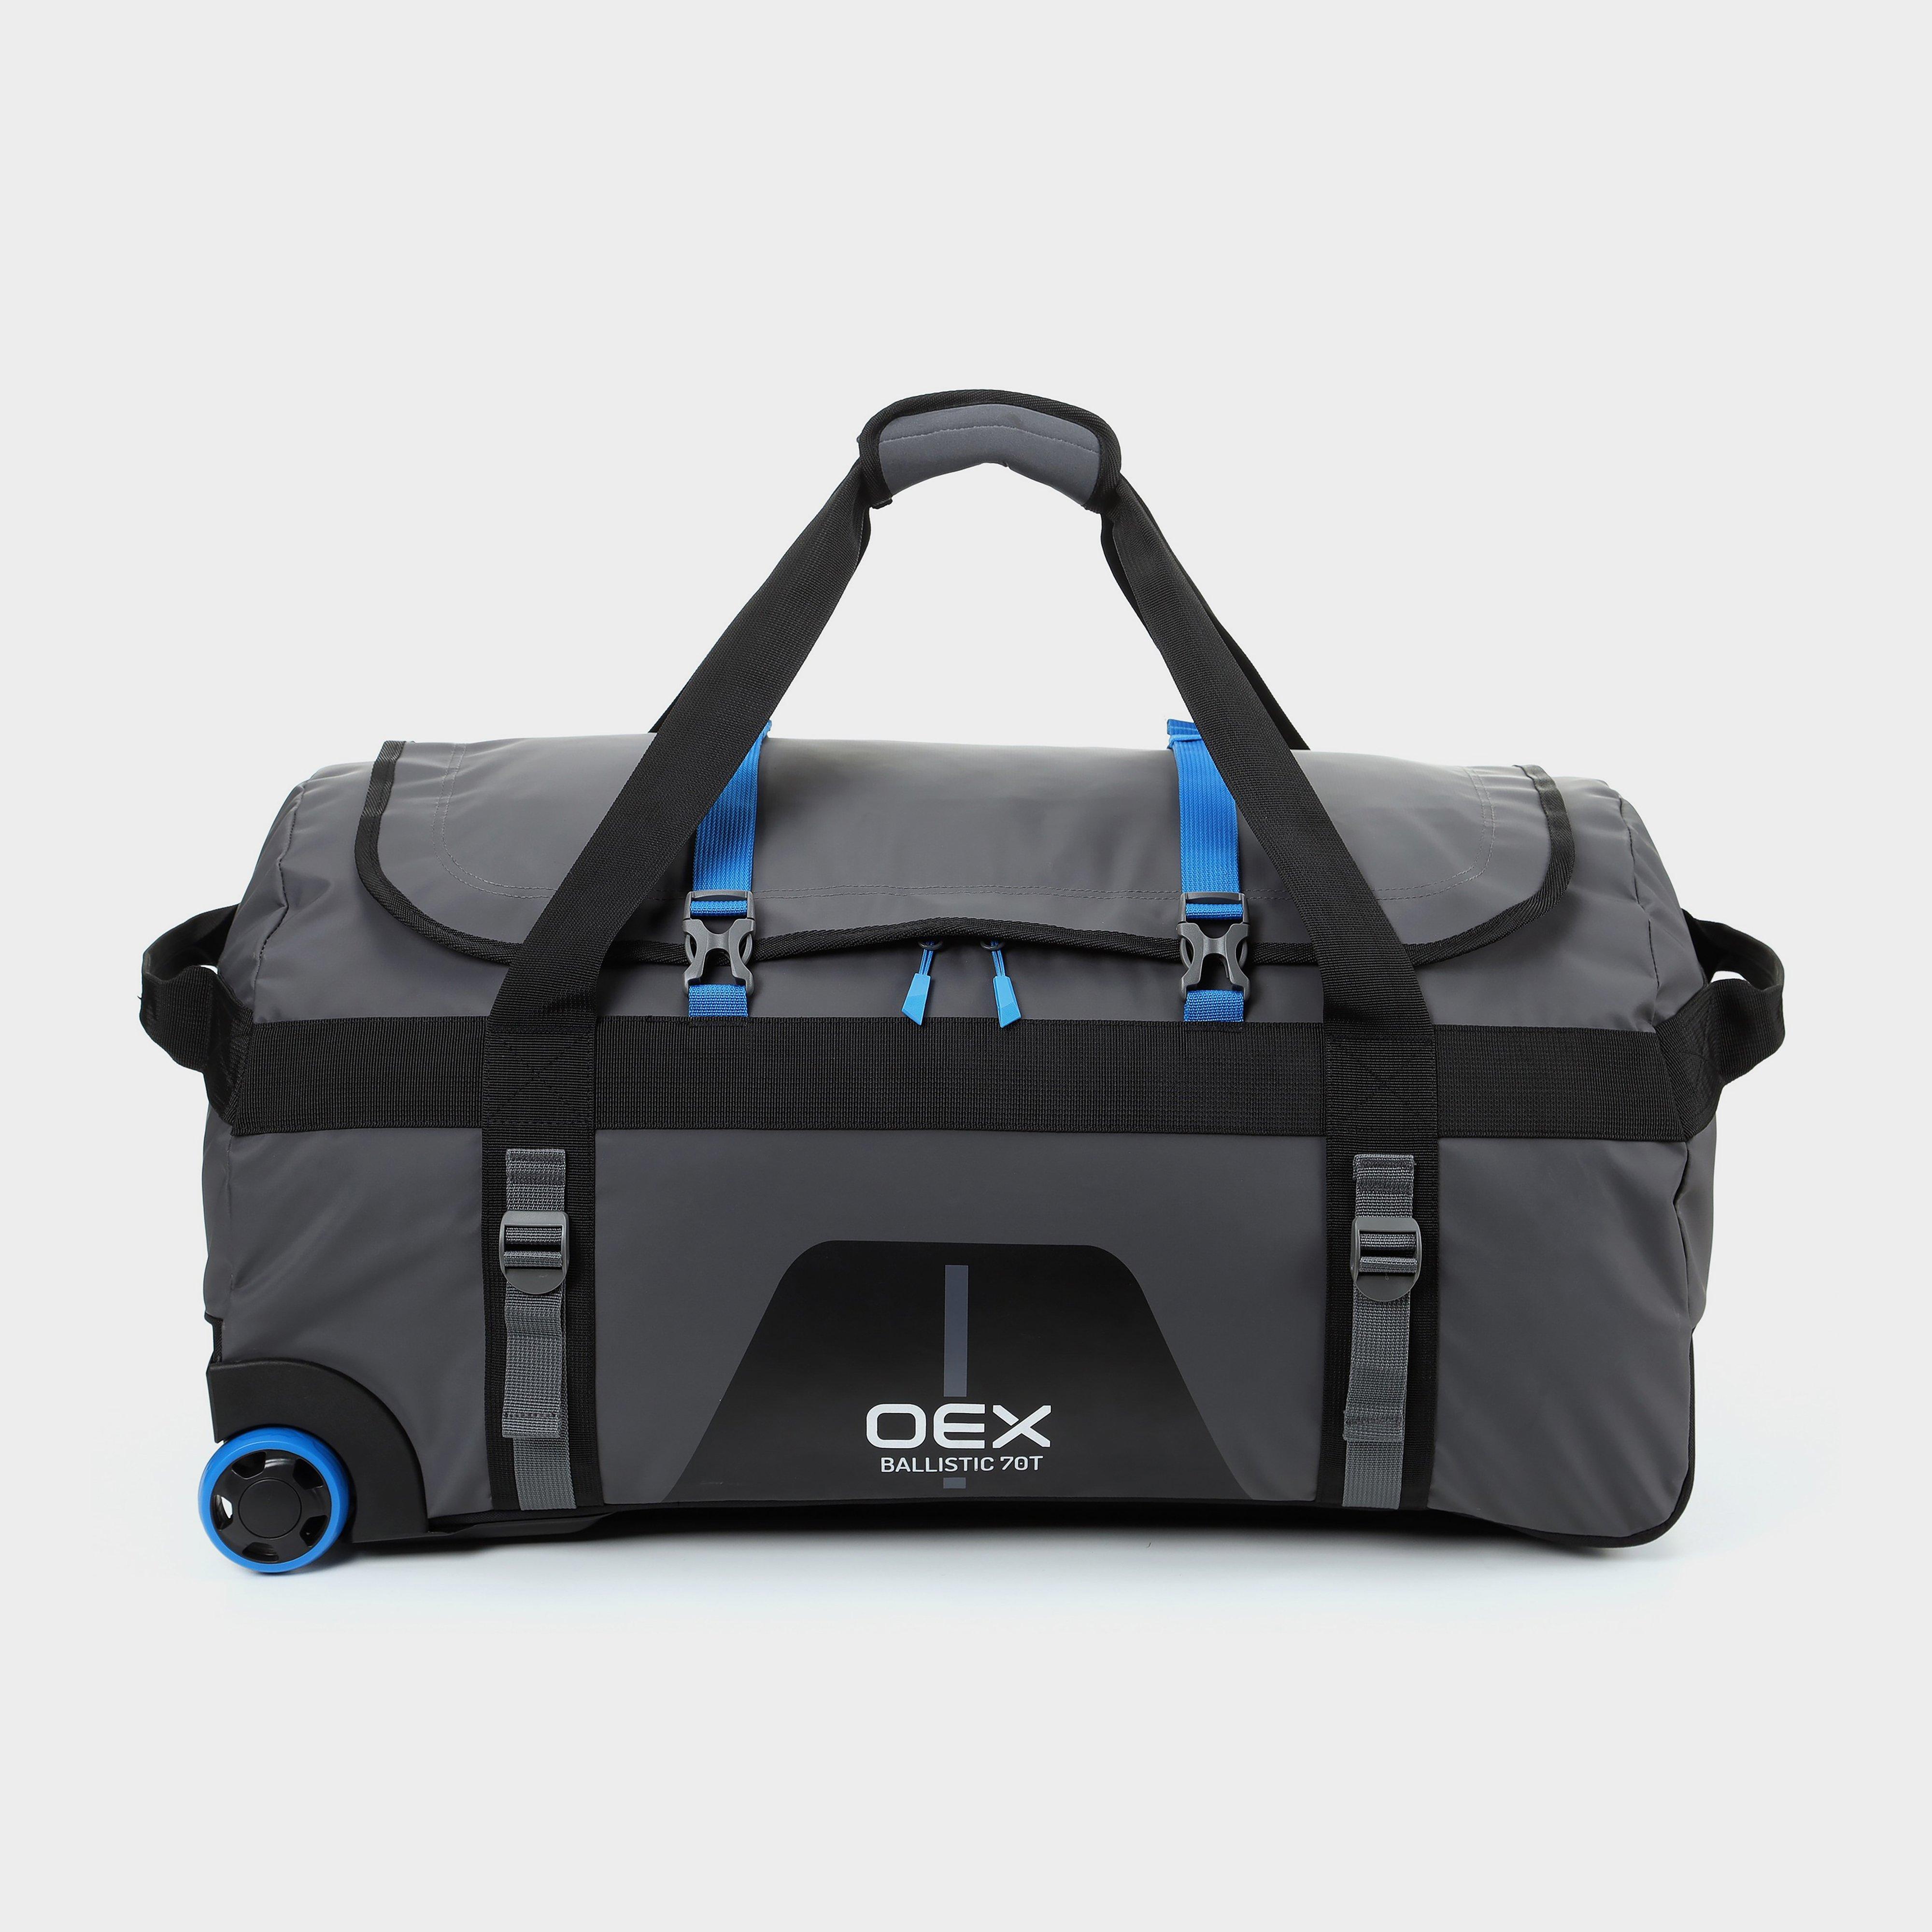  OEX Ballistic 70T Travel Bag, Grey